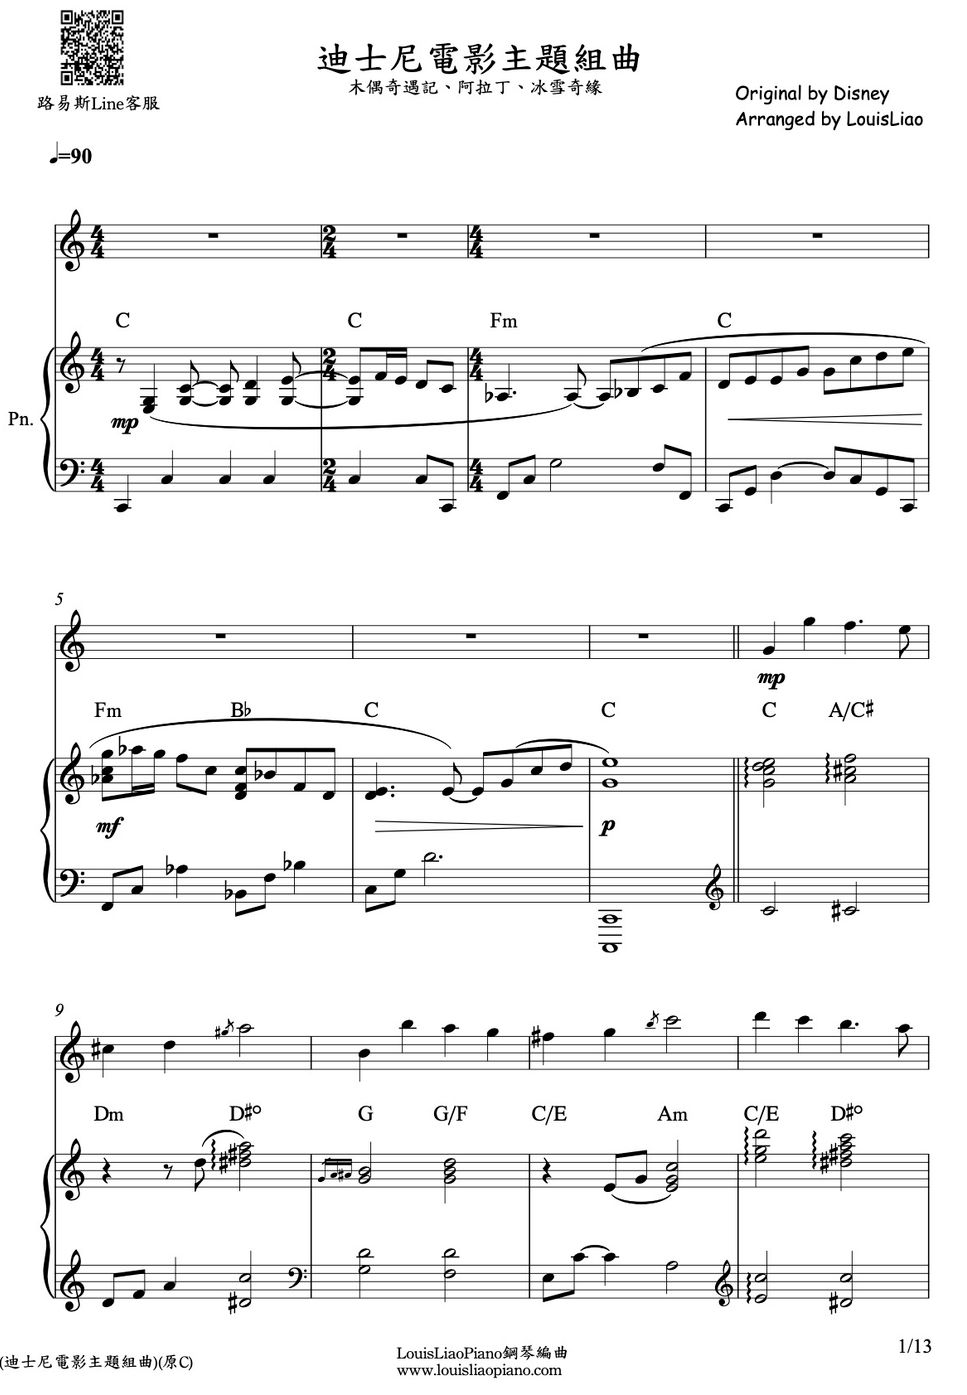 Disney - 迪士尼電影主題組曲 Disney Songs (鋼琴伴奏版) by LouisLiao